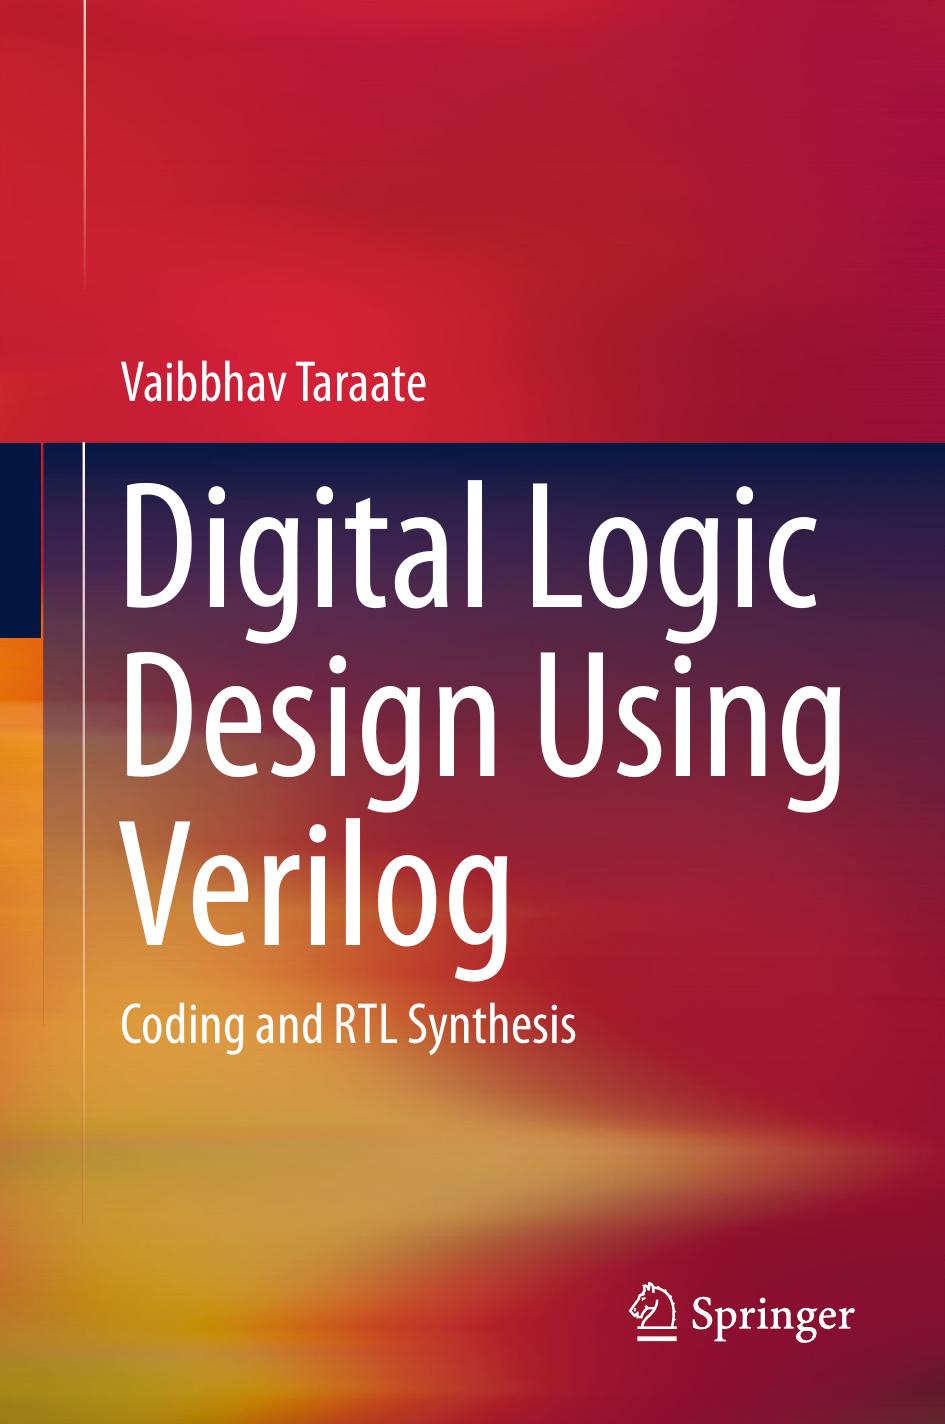 Digital Logic Design Using Verilog Coding and RTL Synthesis 2016